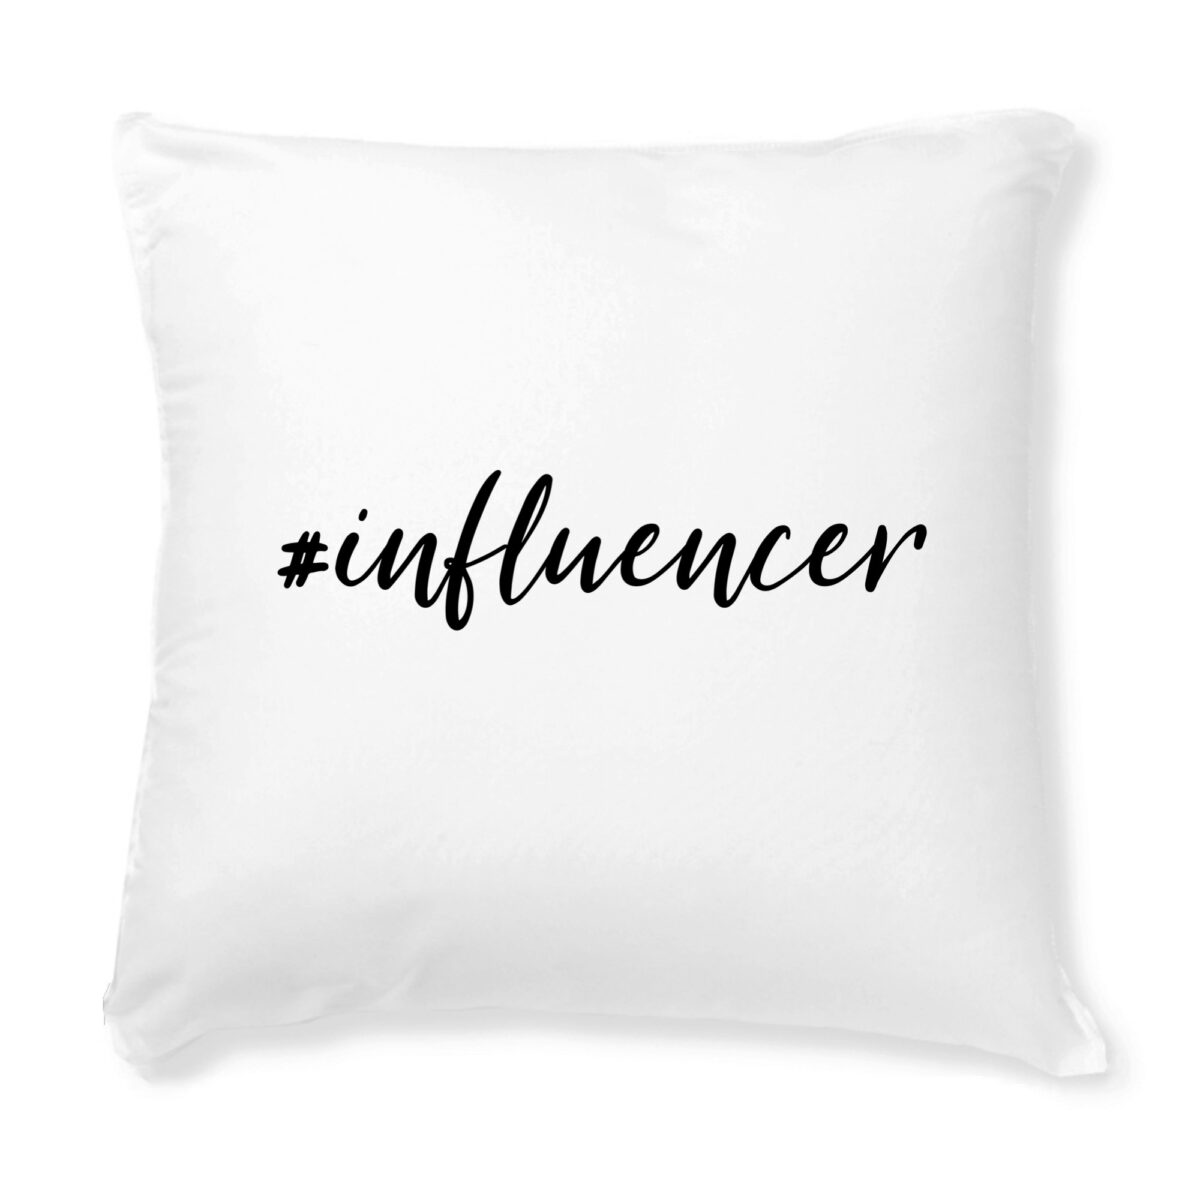 Influencer cushion